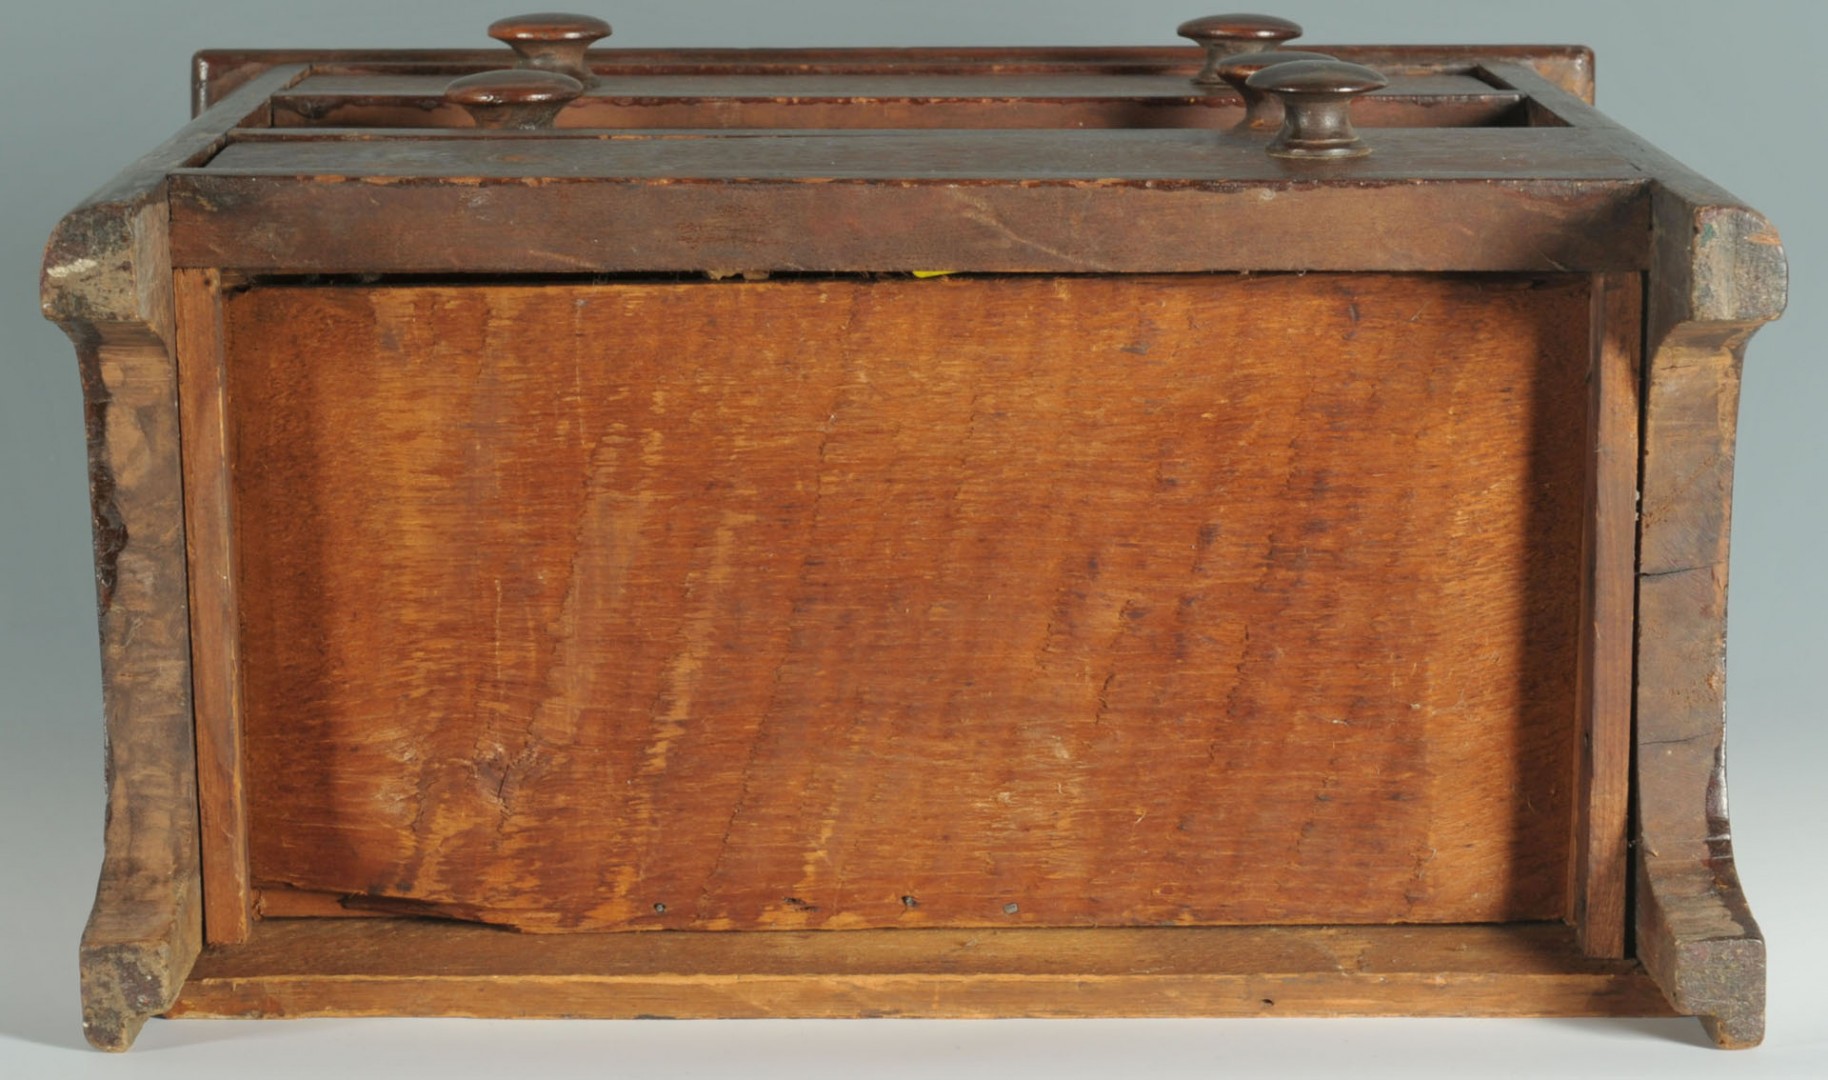 Lot 463: Miniature three-drawer chest